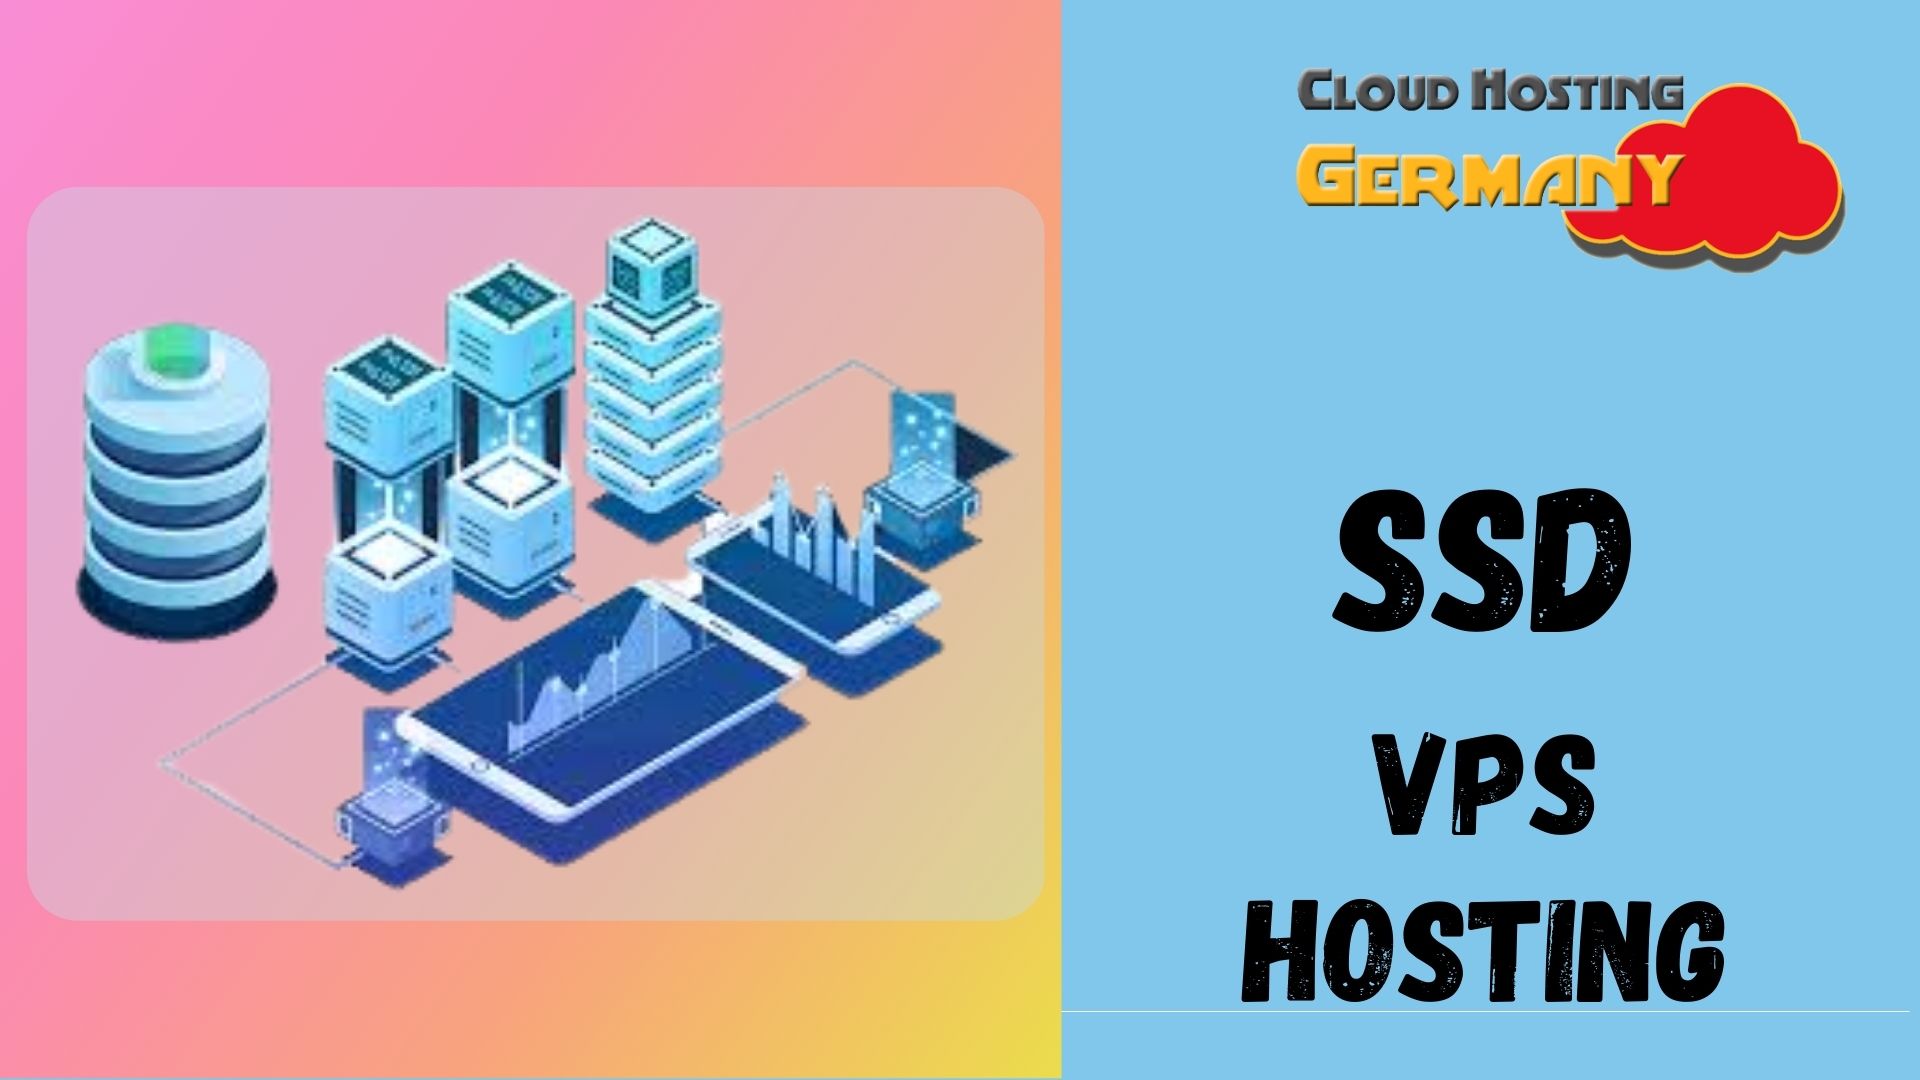 SSD VPS hosting